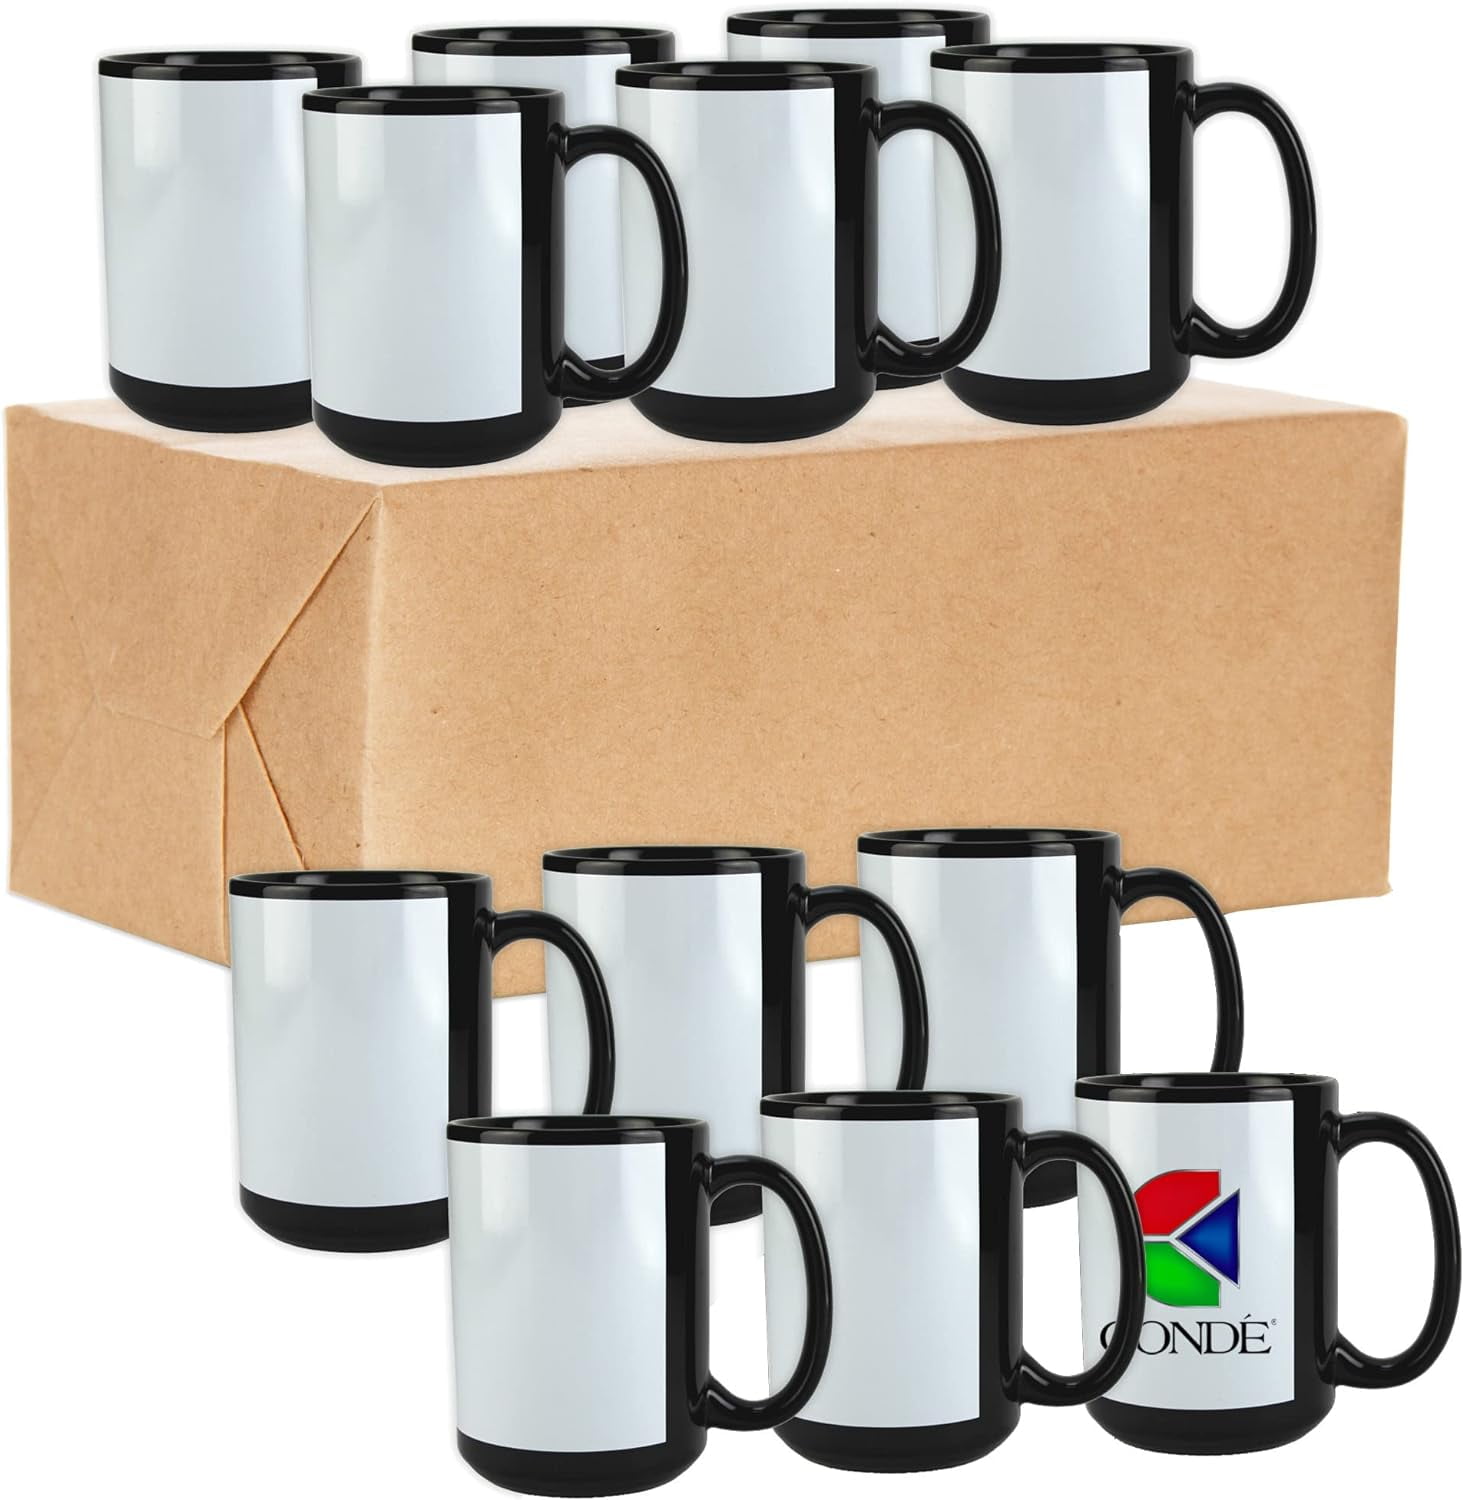 Mugs Bulk, Bulk Mugs, Bulk Gifts, 11oz Sublimation Mugs Bulk, 15oz  Sublimation Mugs Bulk, Coffee Mugs Bulk, Bulk Coffee Mugs, Mug Bulk, 